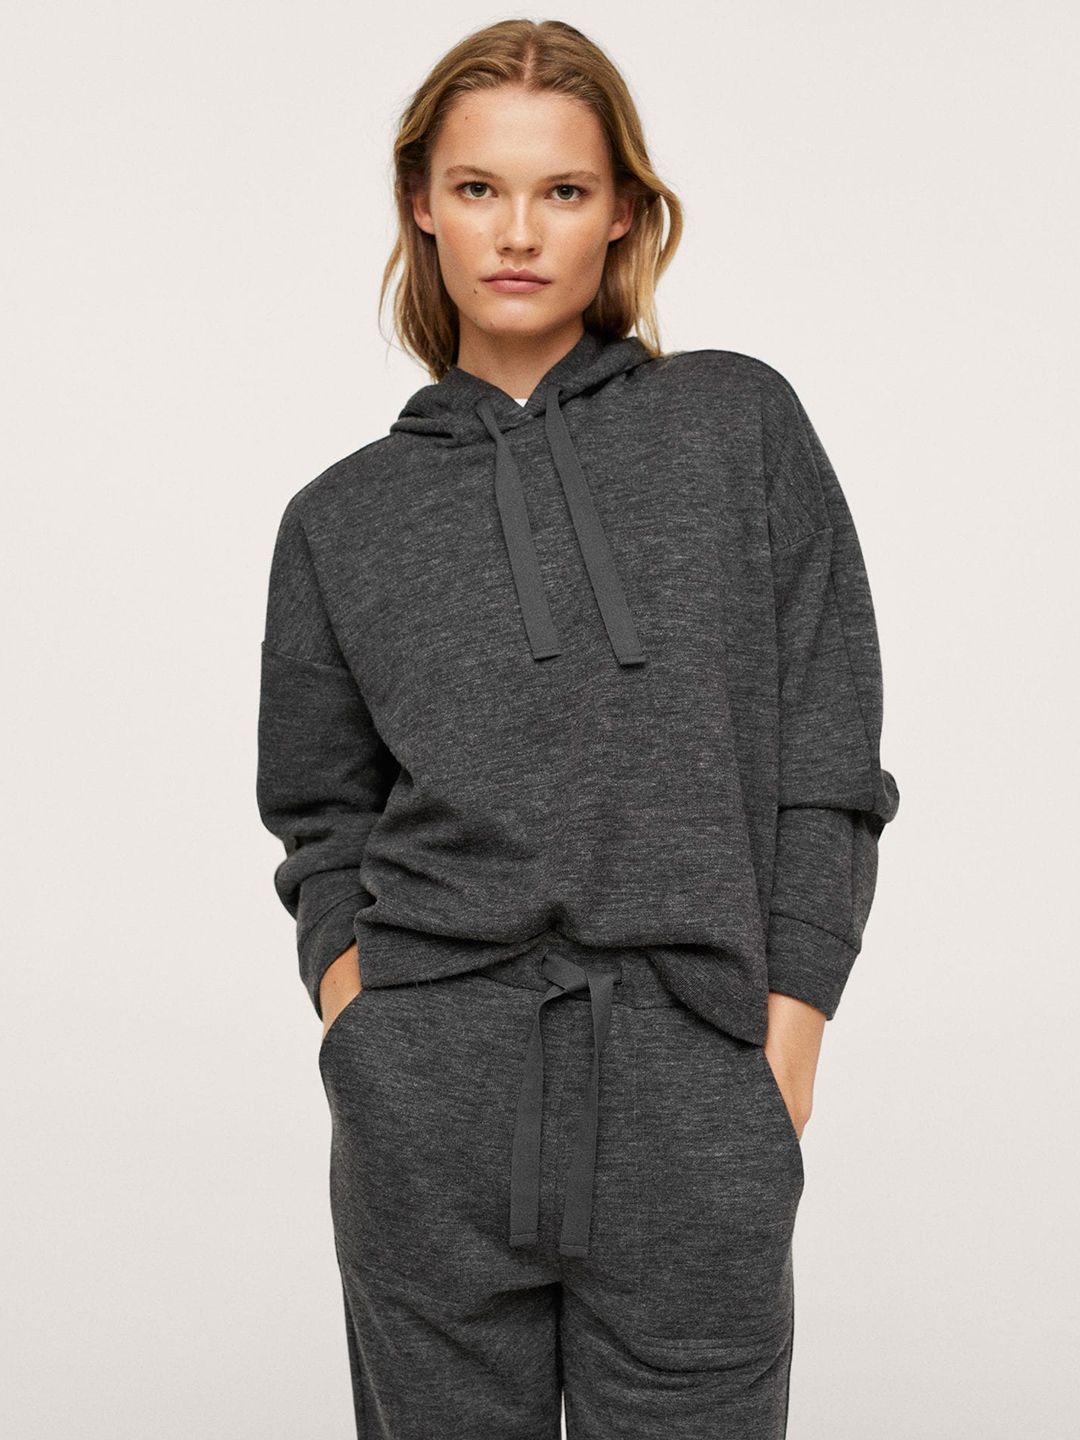 MANGO Women Charcoal Grey Solid Hooded Sweatshirt With Melange Effect Price in India